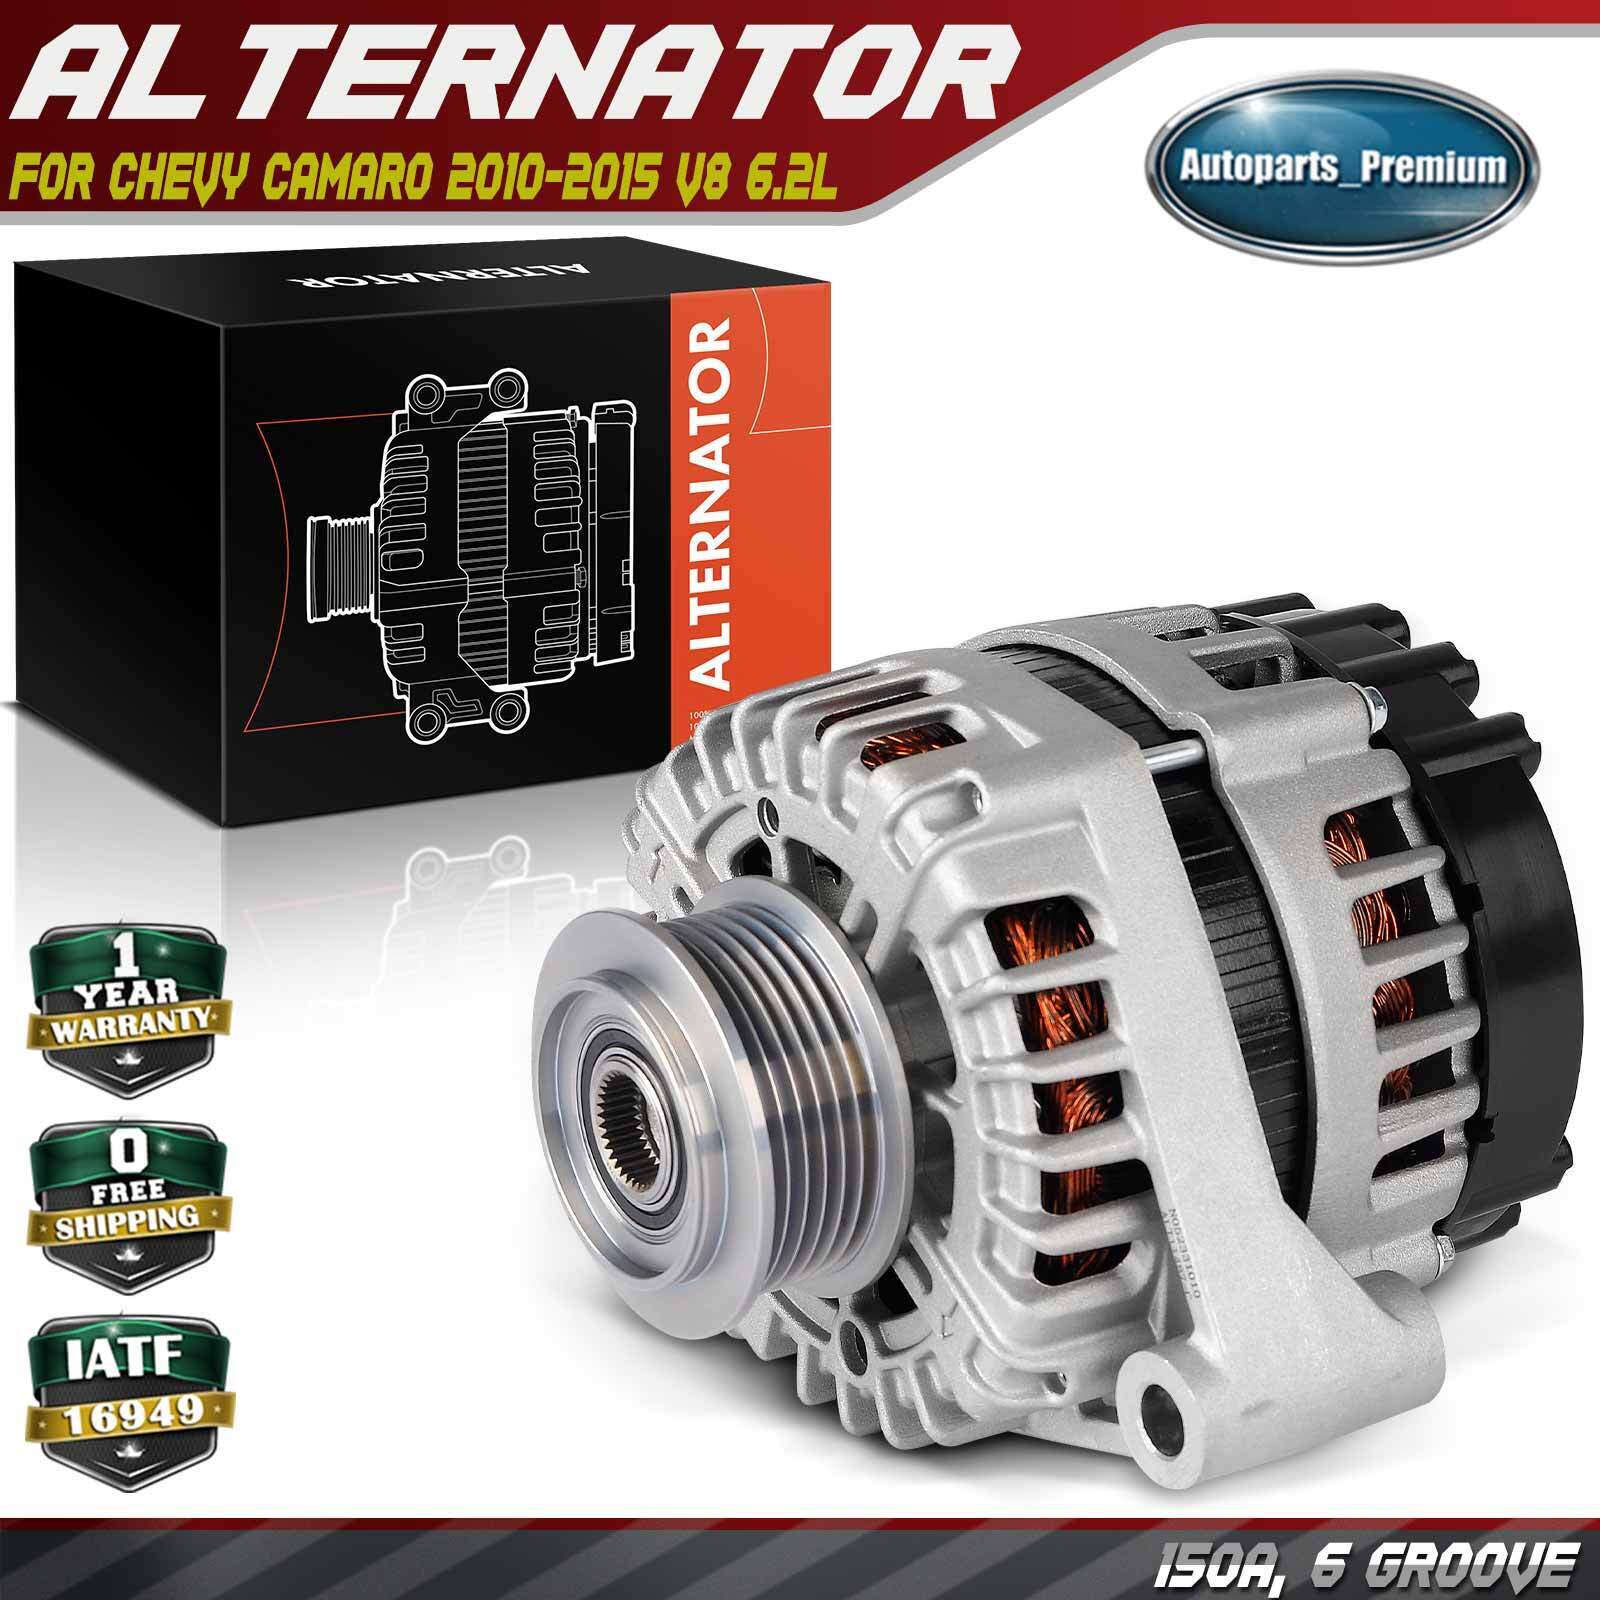 Alternator for Chevrolet Camaro 2010-2015 V8 6.2L VIN: J 150 A 12V CW 6-Groove